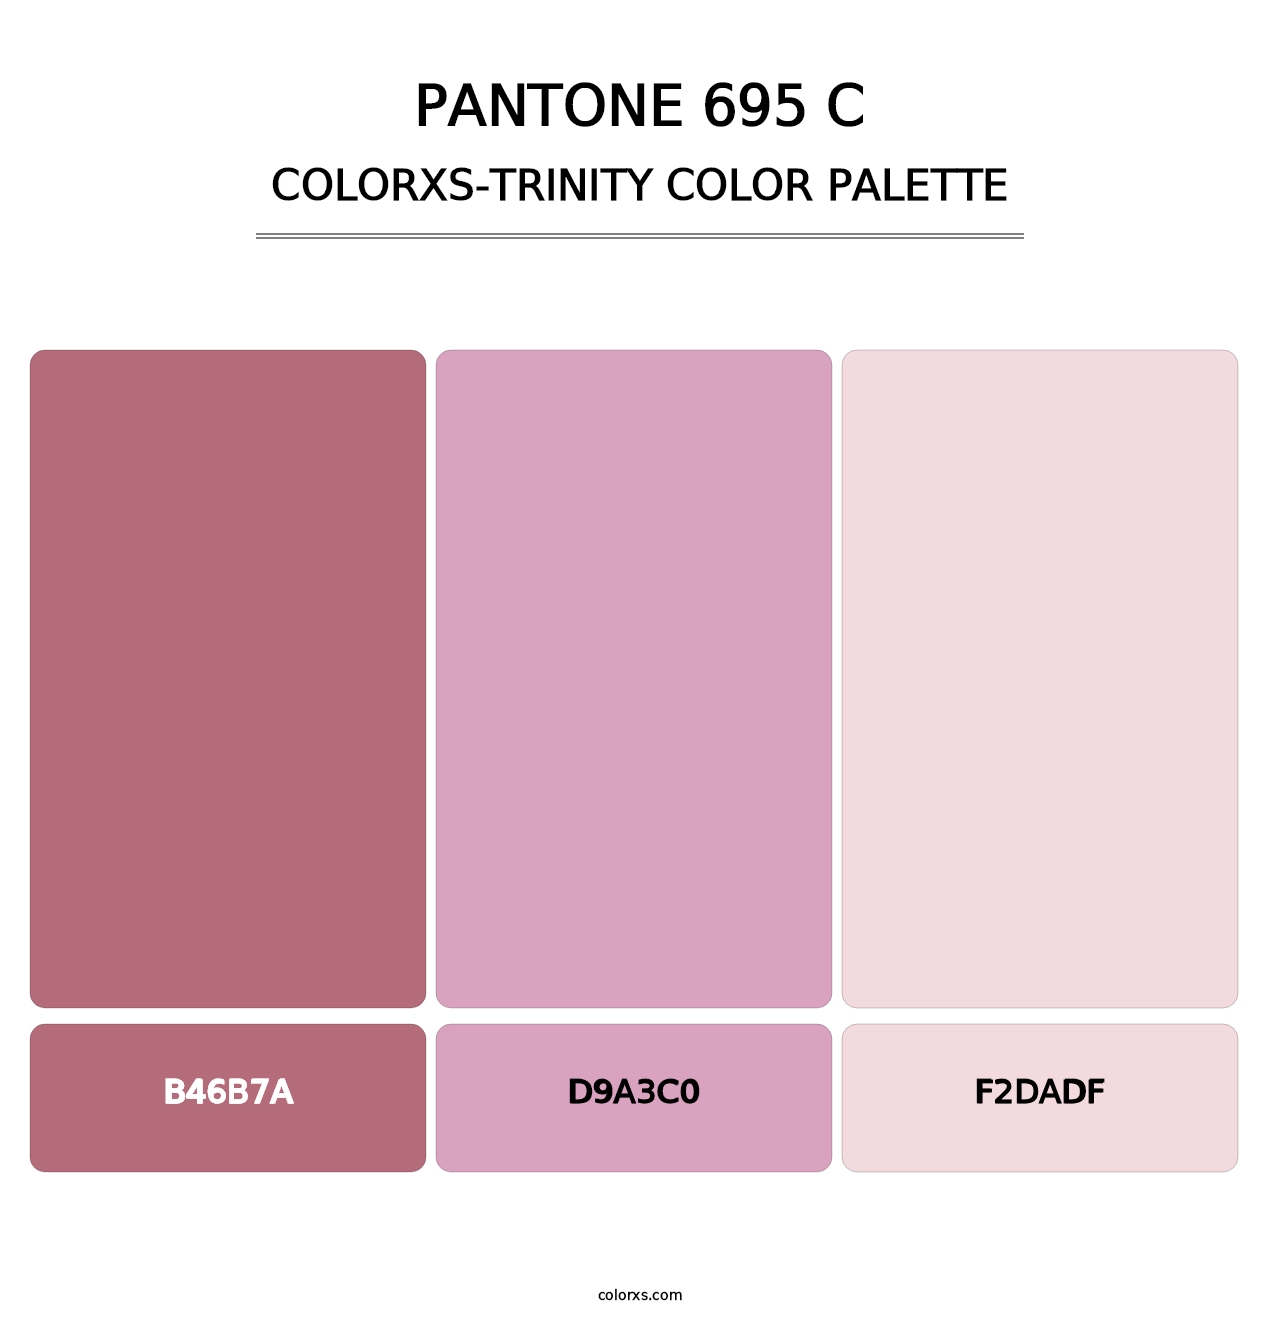 PANTONE 695 C - Colorxs Trinity Palette